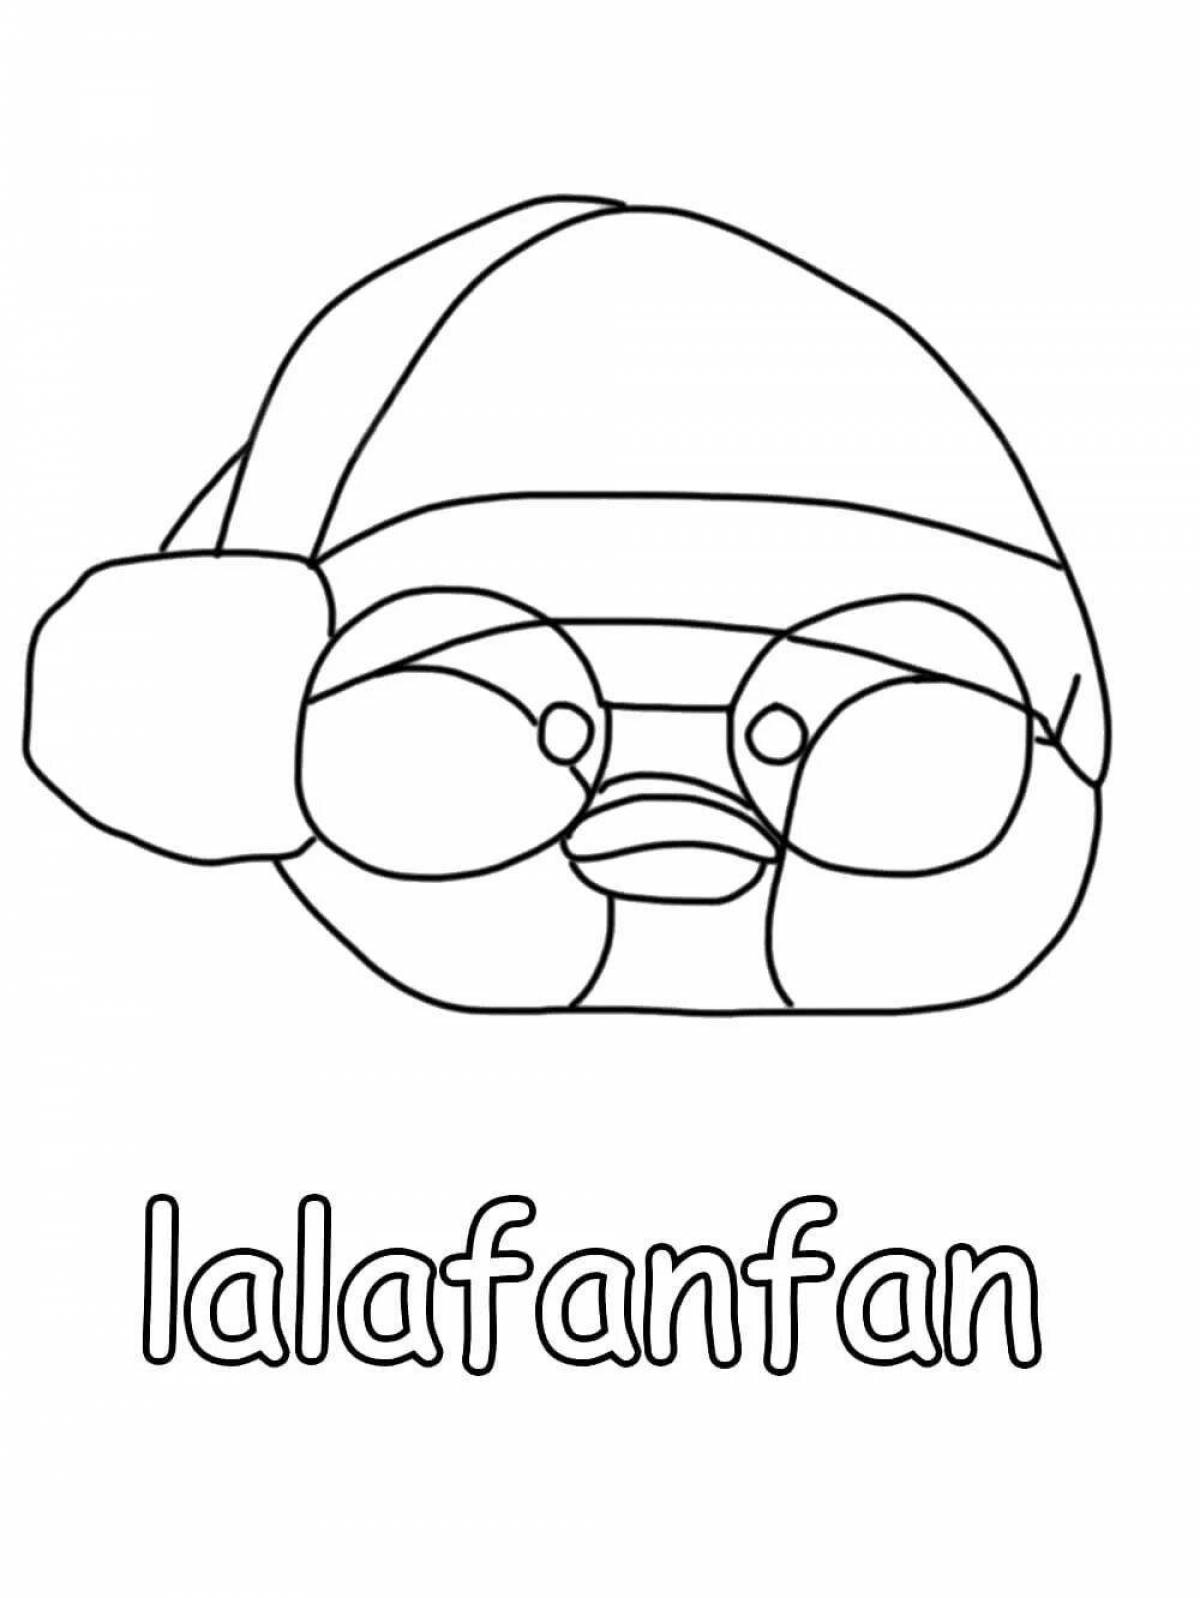 Lalafanfan playful duck print